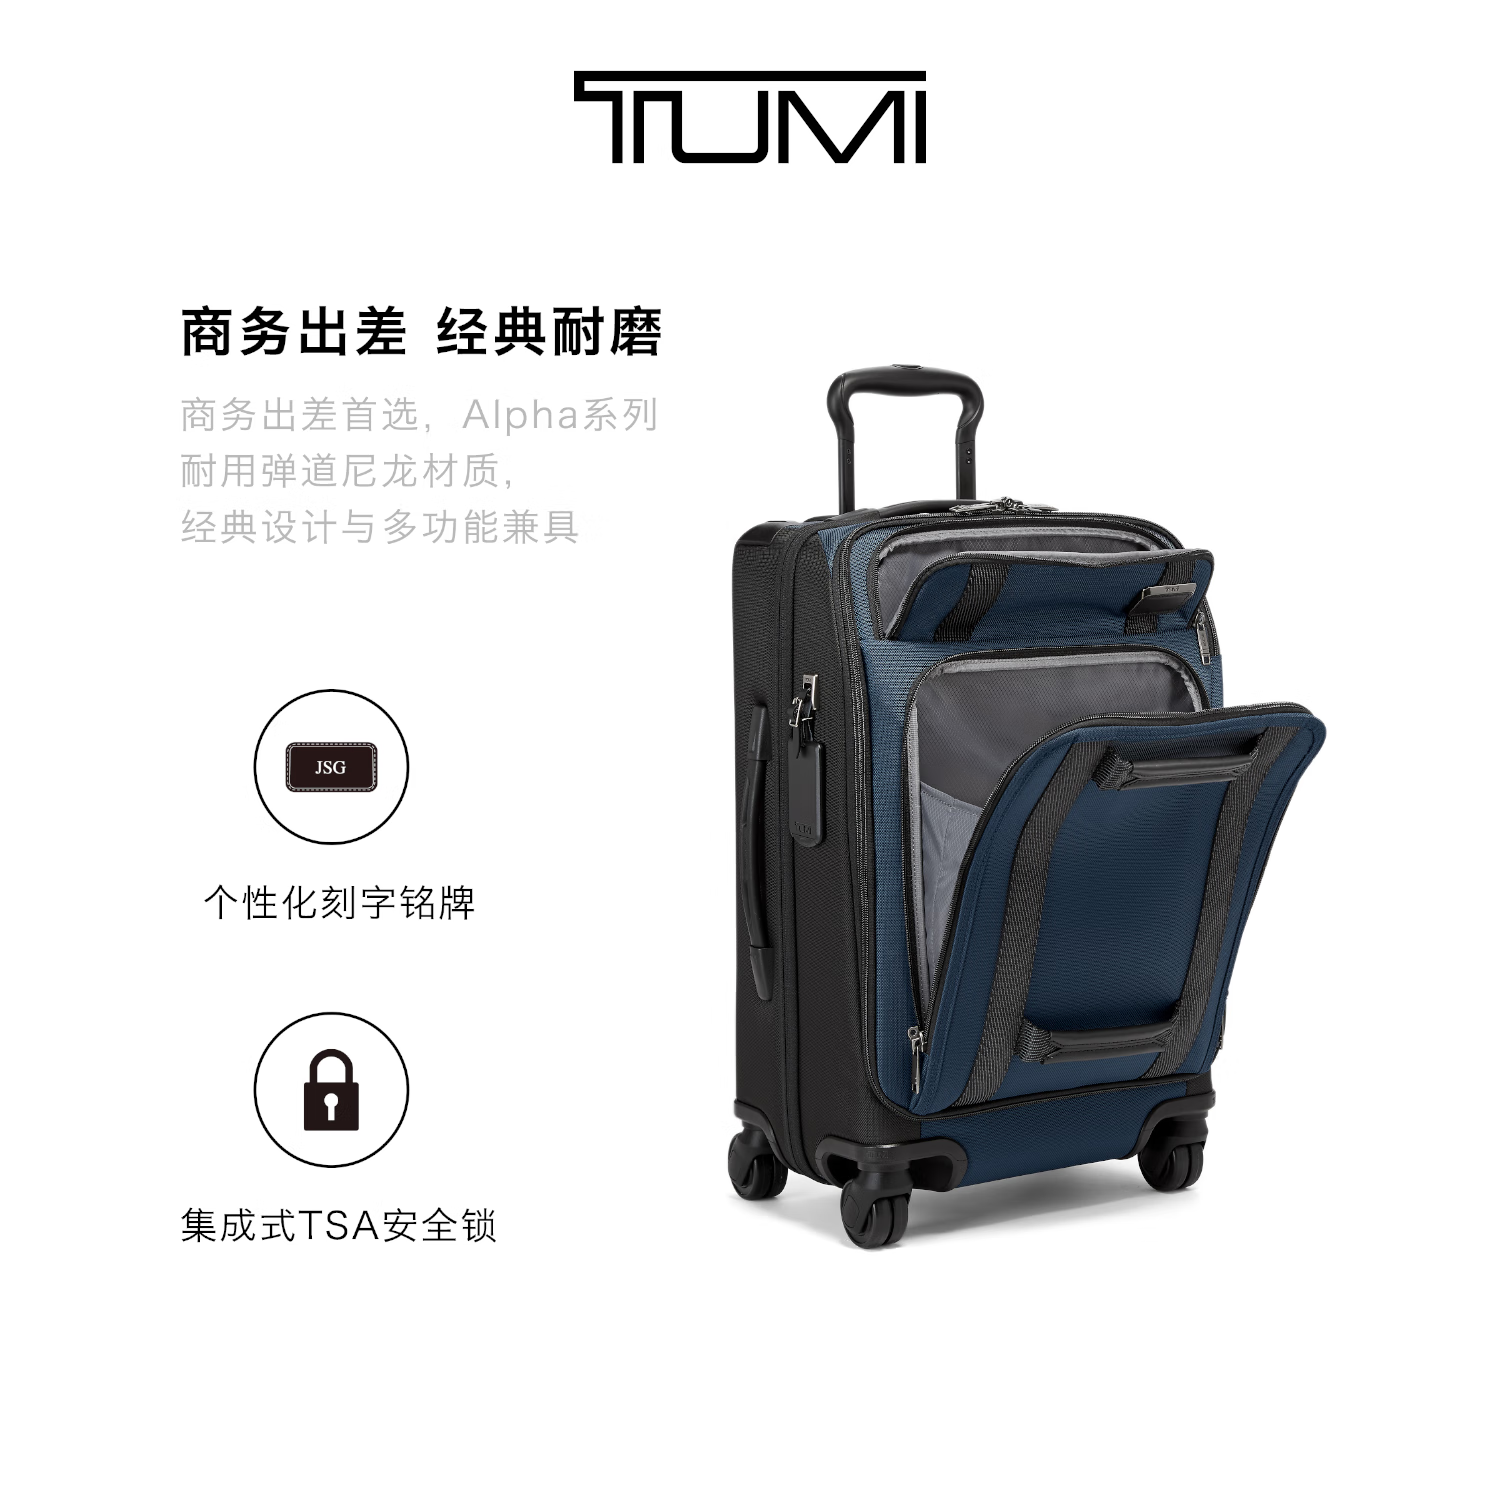 TUMI 途明 Merge商务差旅旅行箱 20英寸 022028660D2 券后2167.36元